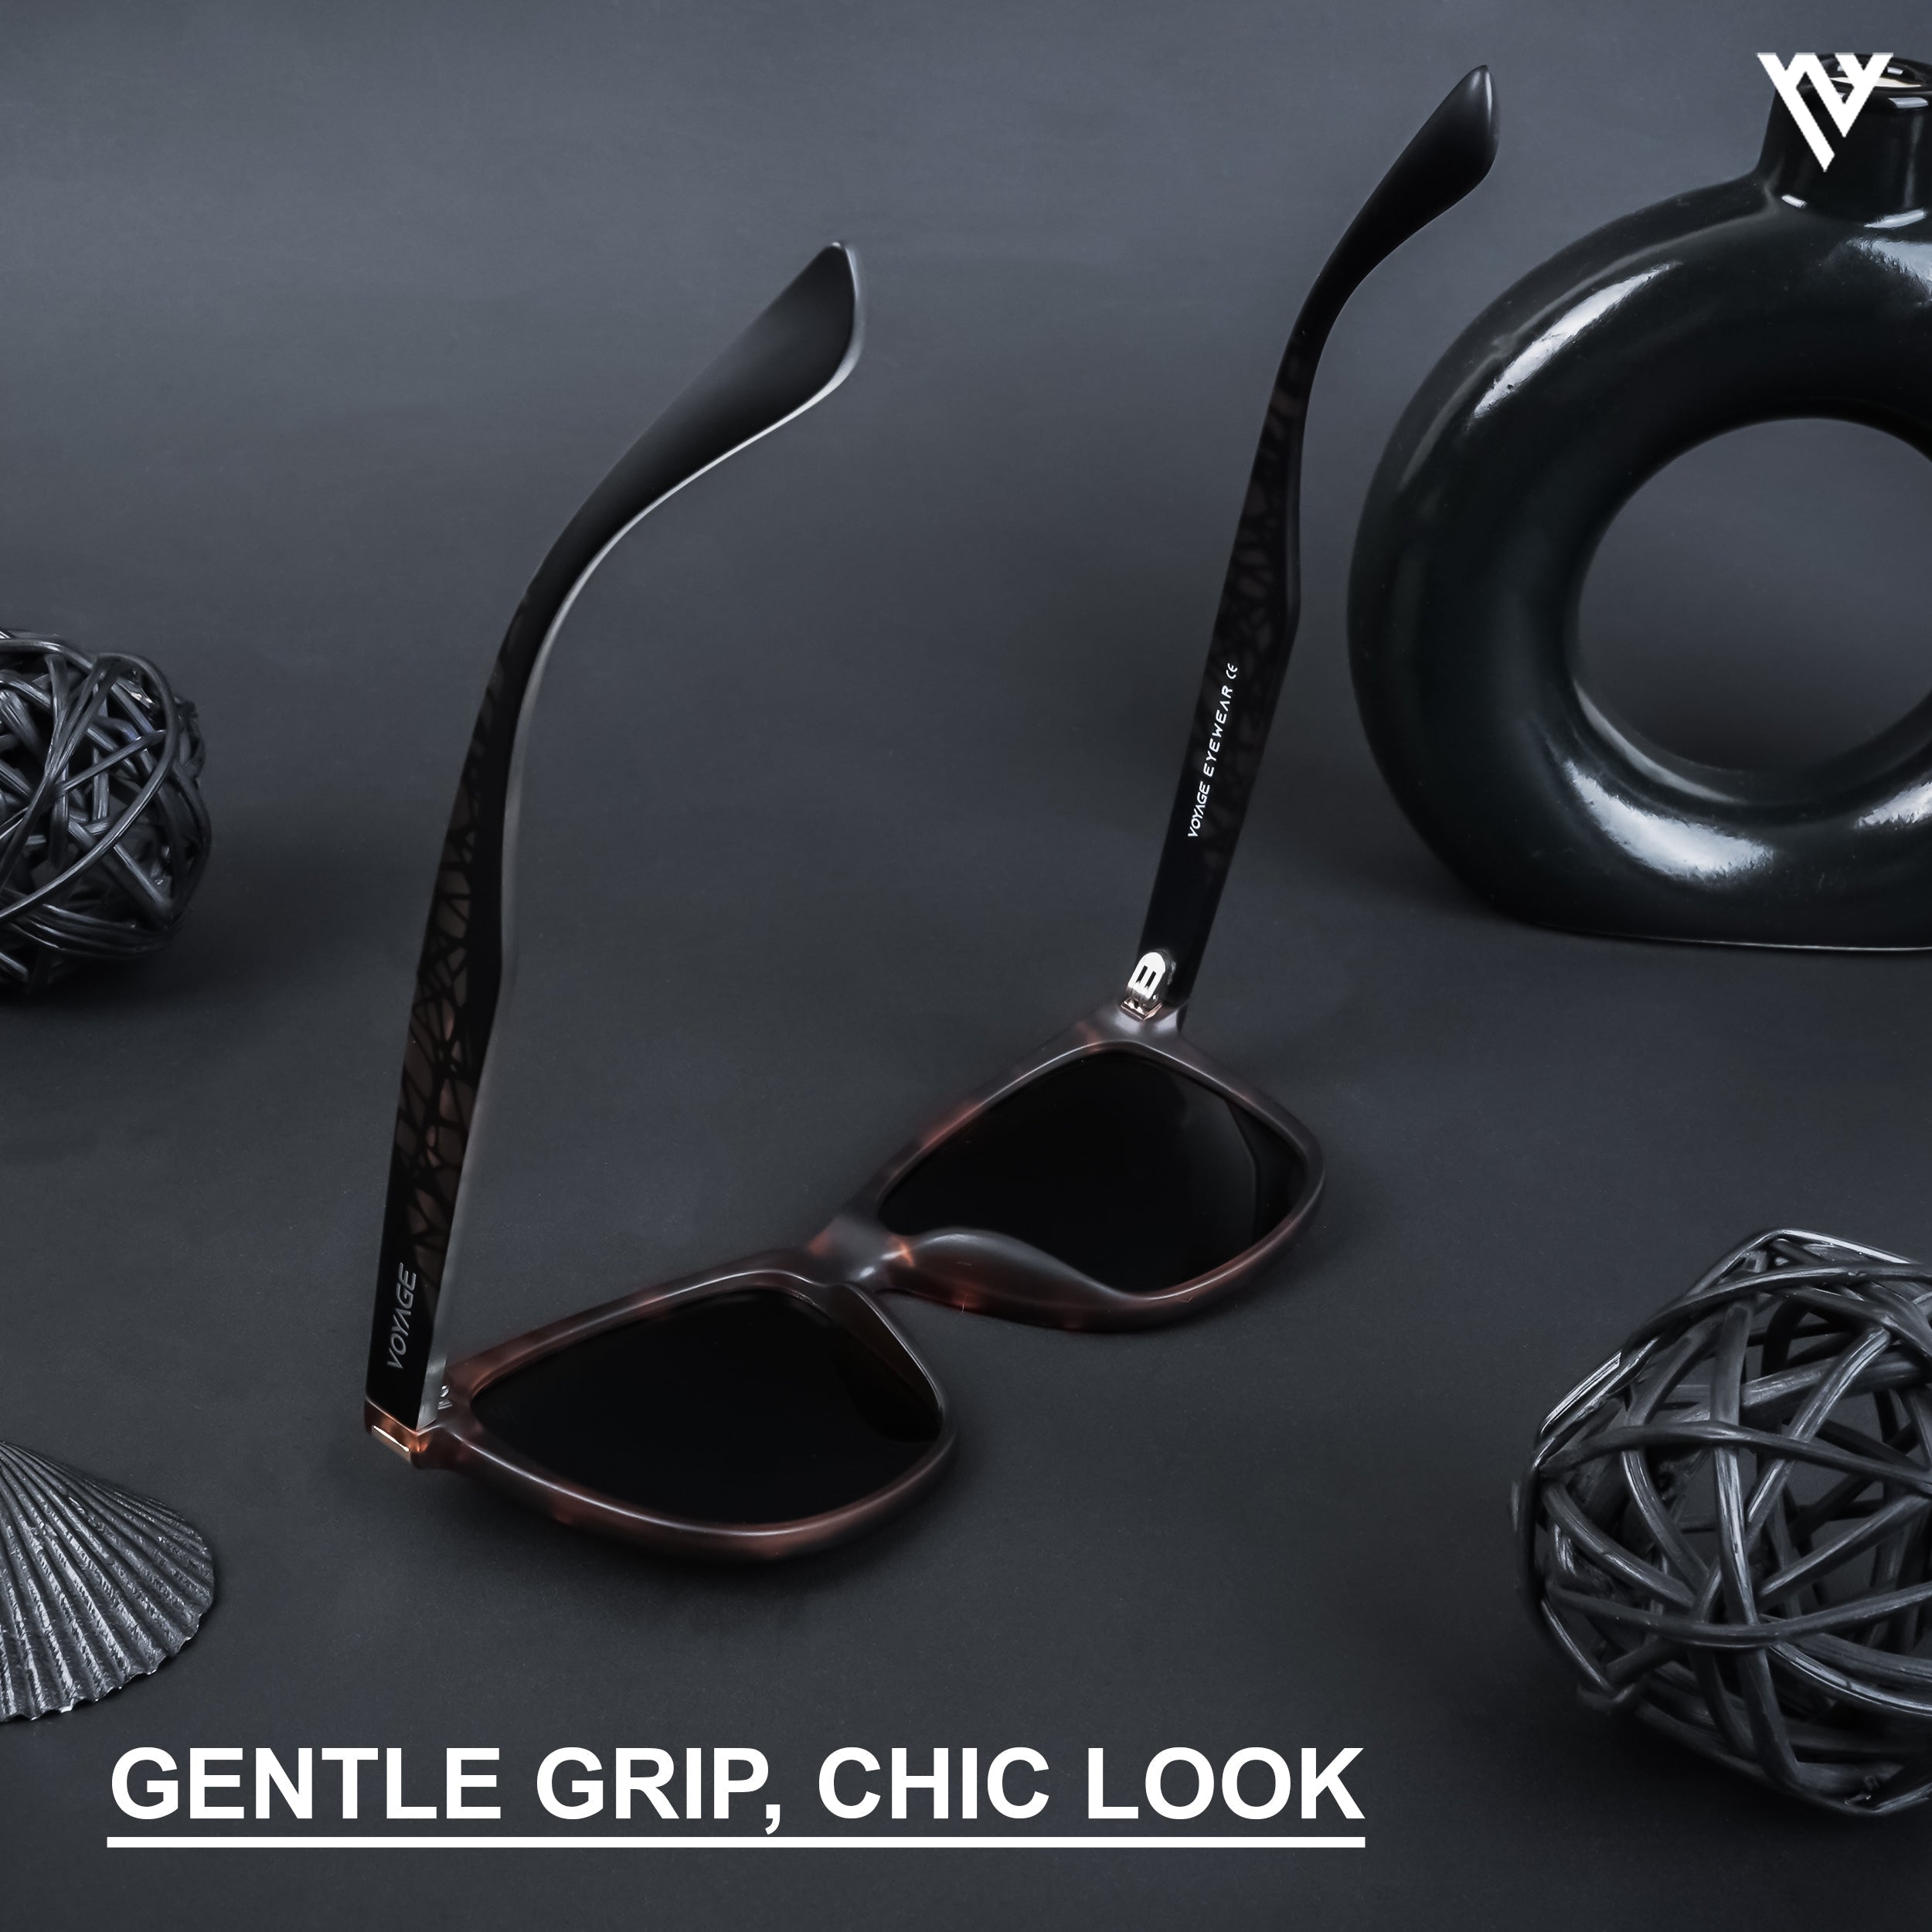 Voyage Exclusive Green Polarized Wayfarer Sunglasses for Men & Women - PMG4580